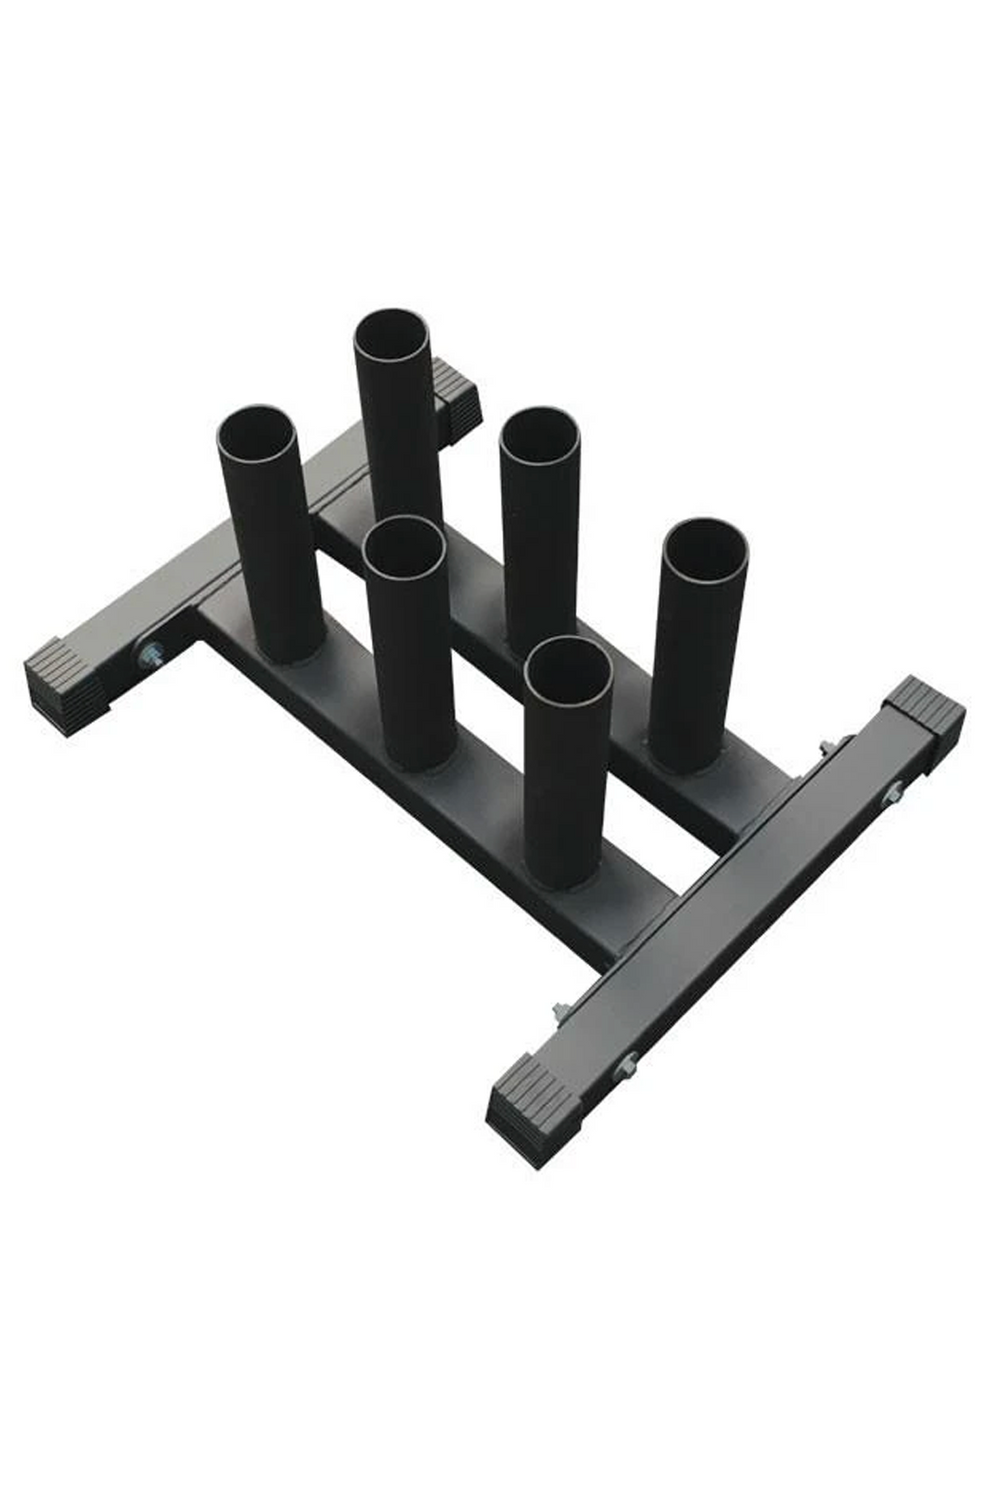 Black vertical Barbell Rack